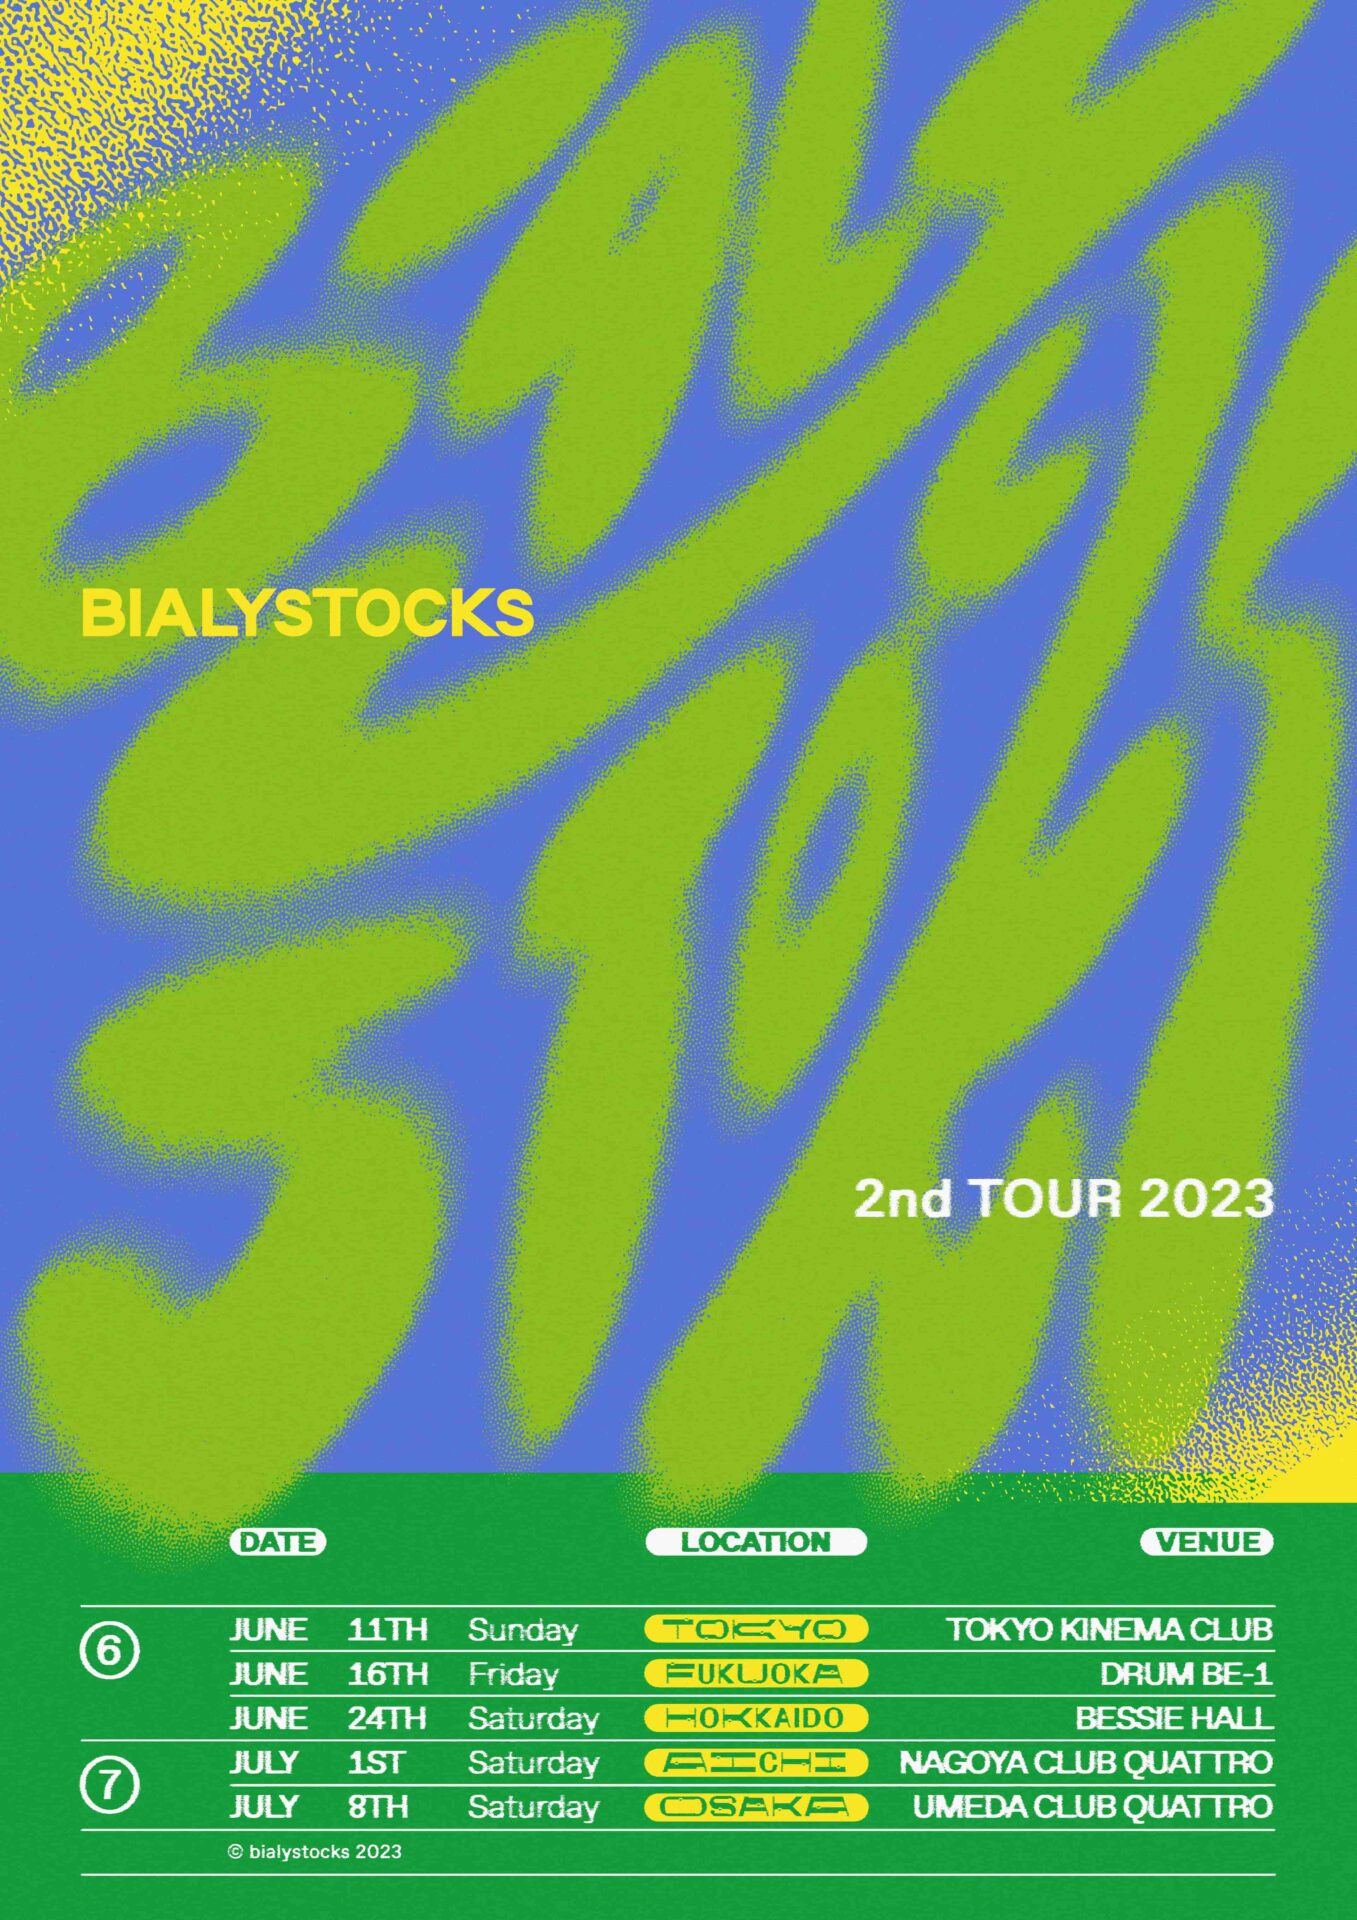 Bialystocks Tour 2023